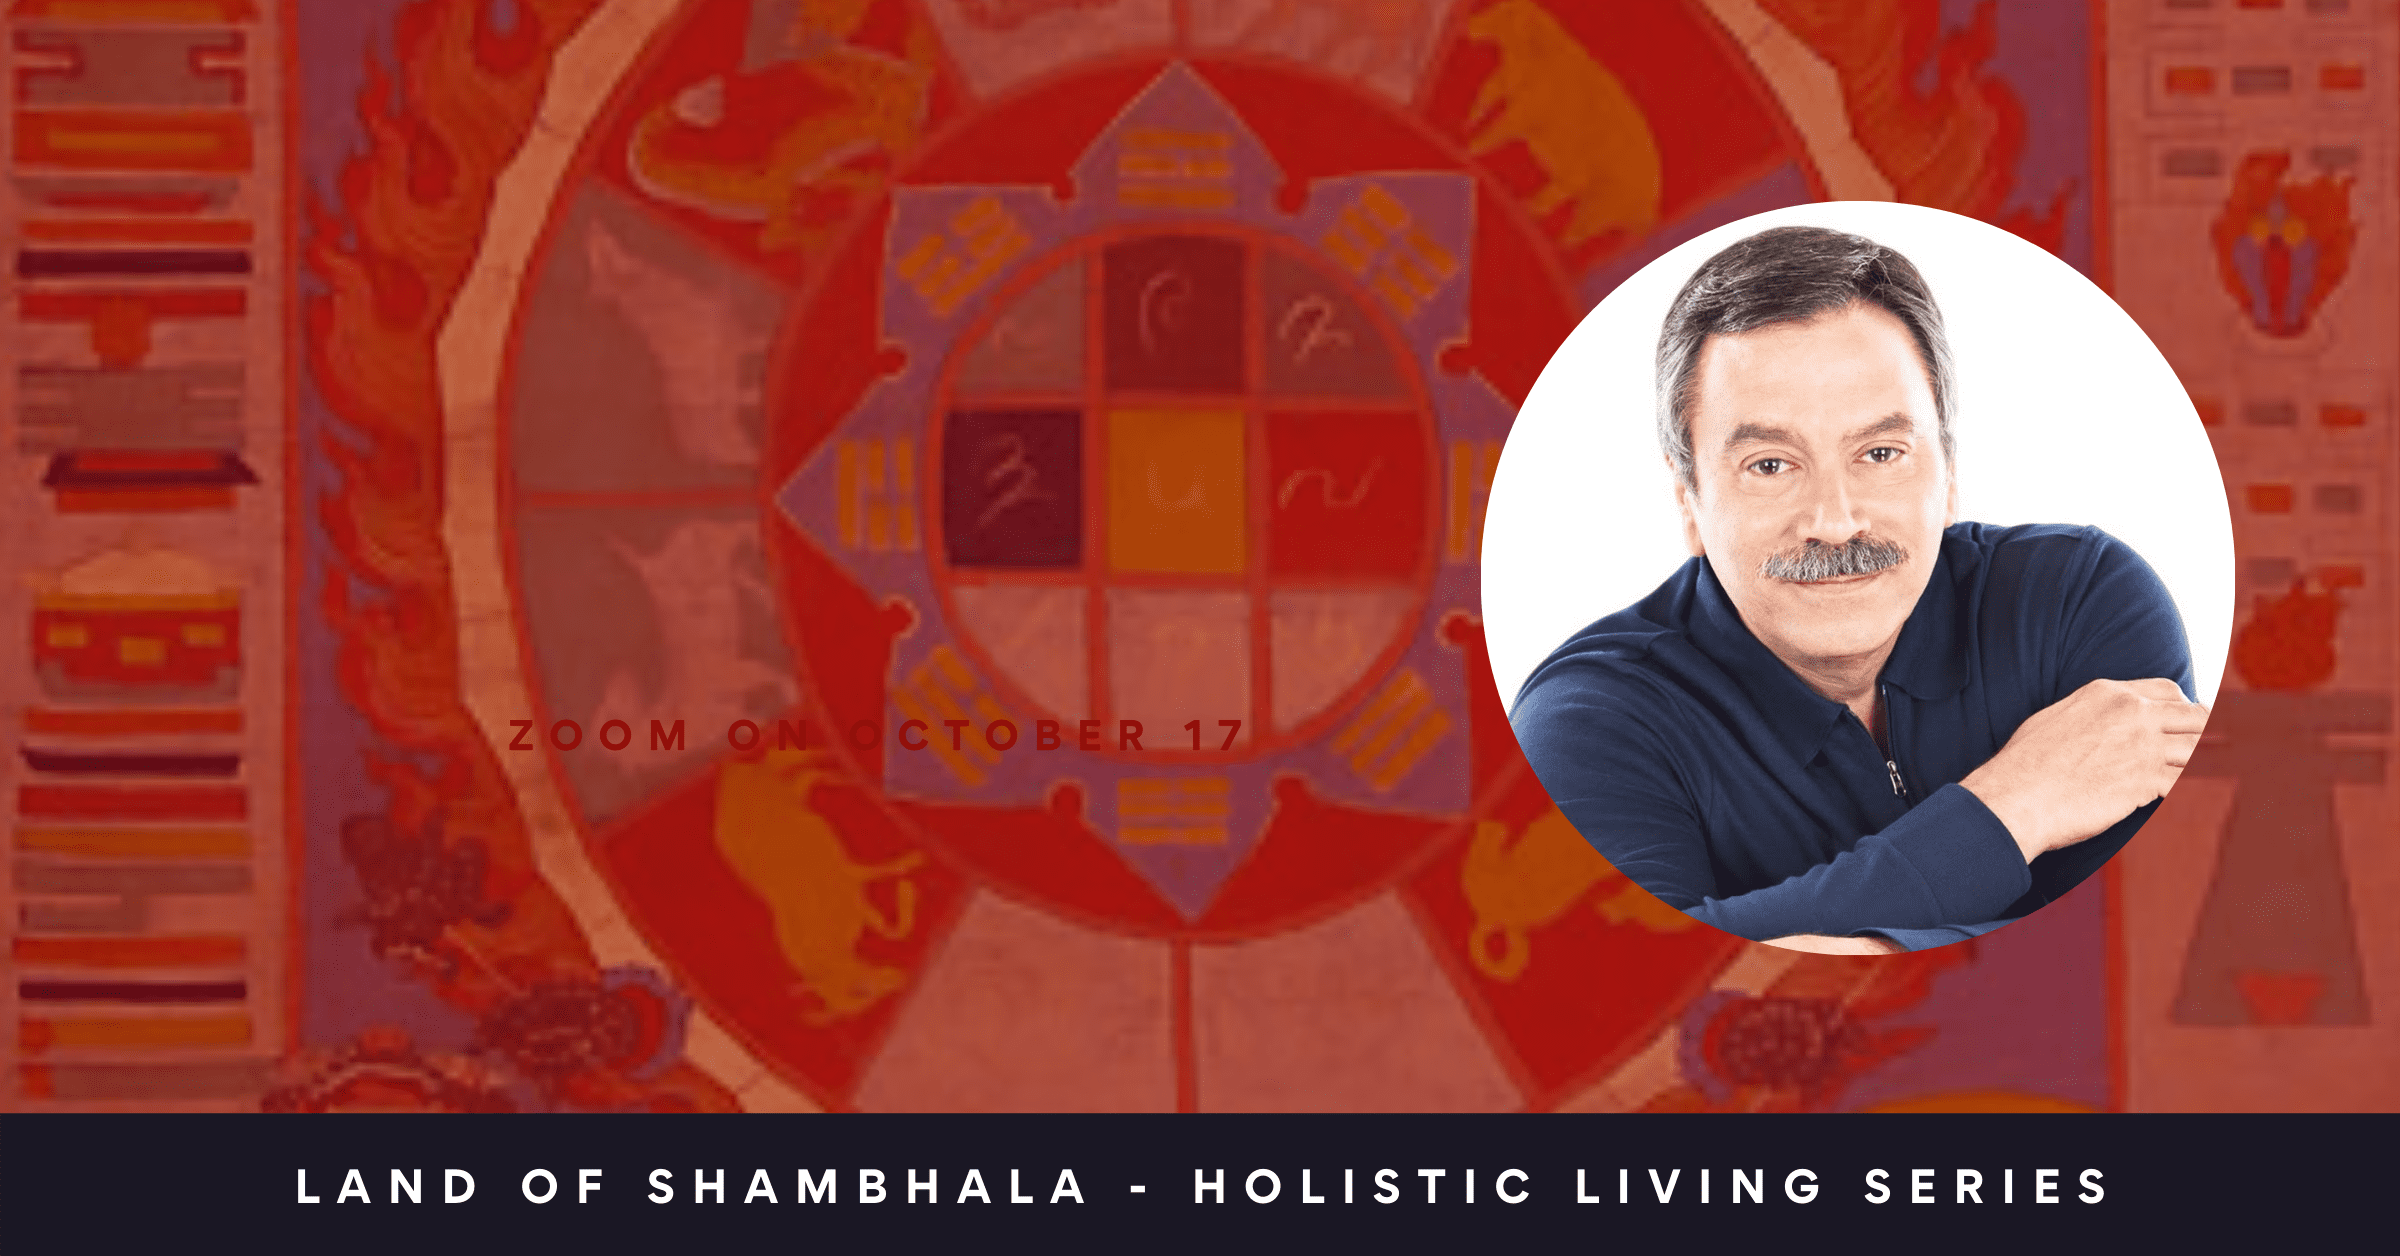 Online: Kalachakra Astrology and the Spiritual Path